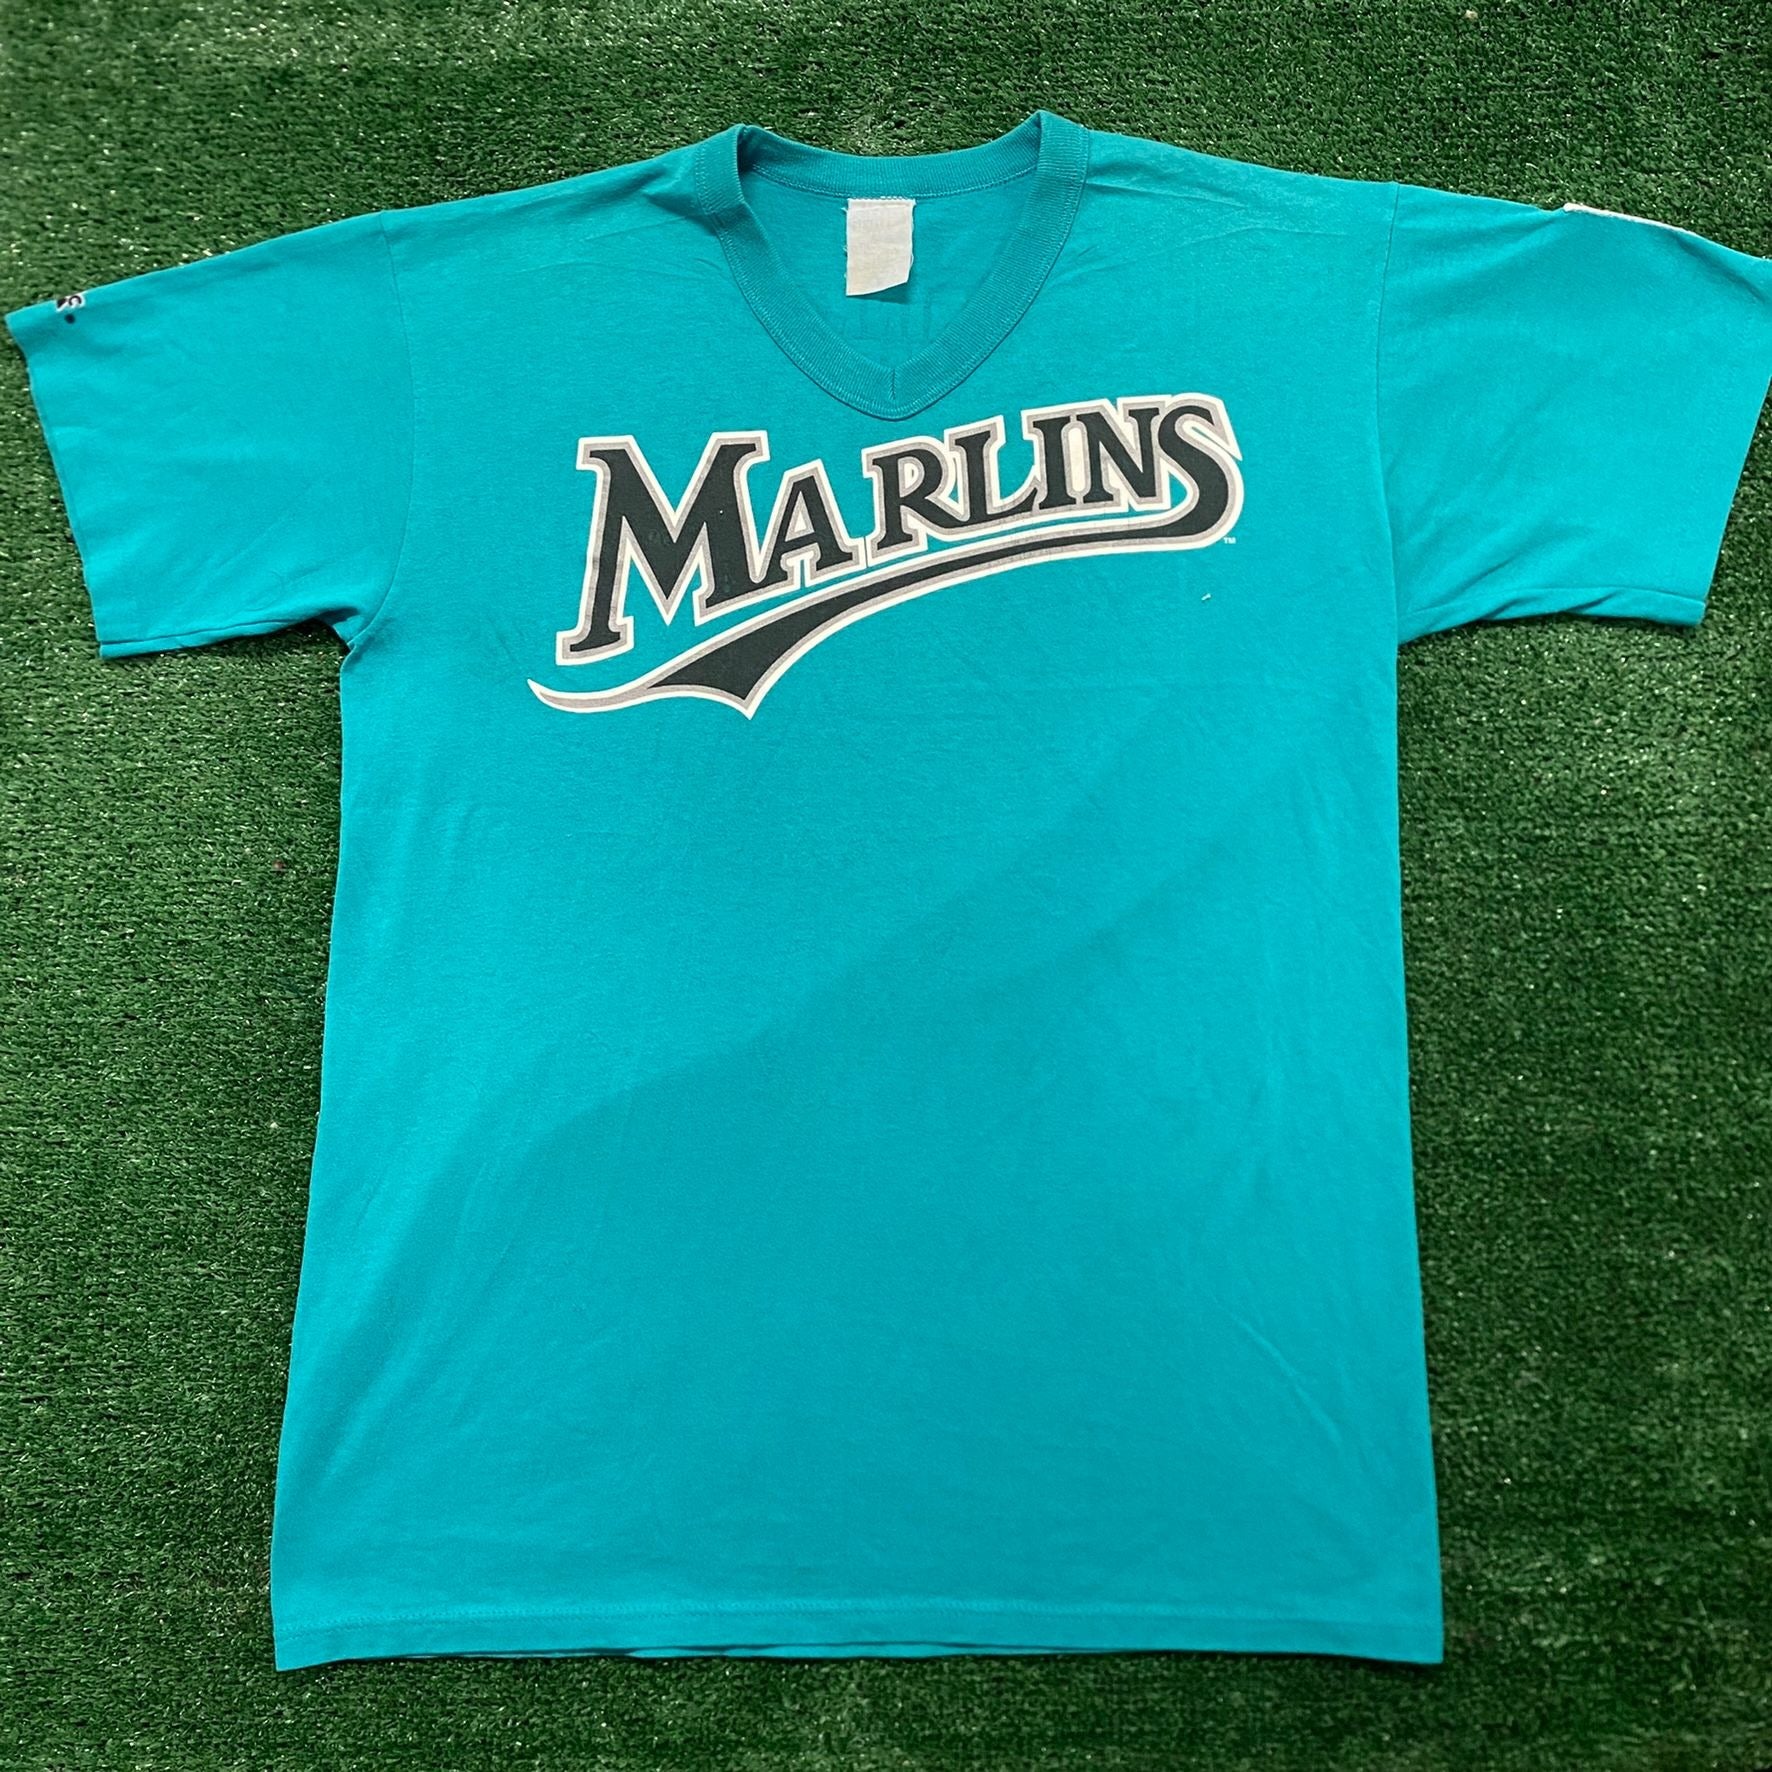 teal marlins shirt